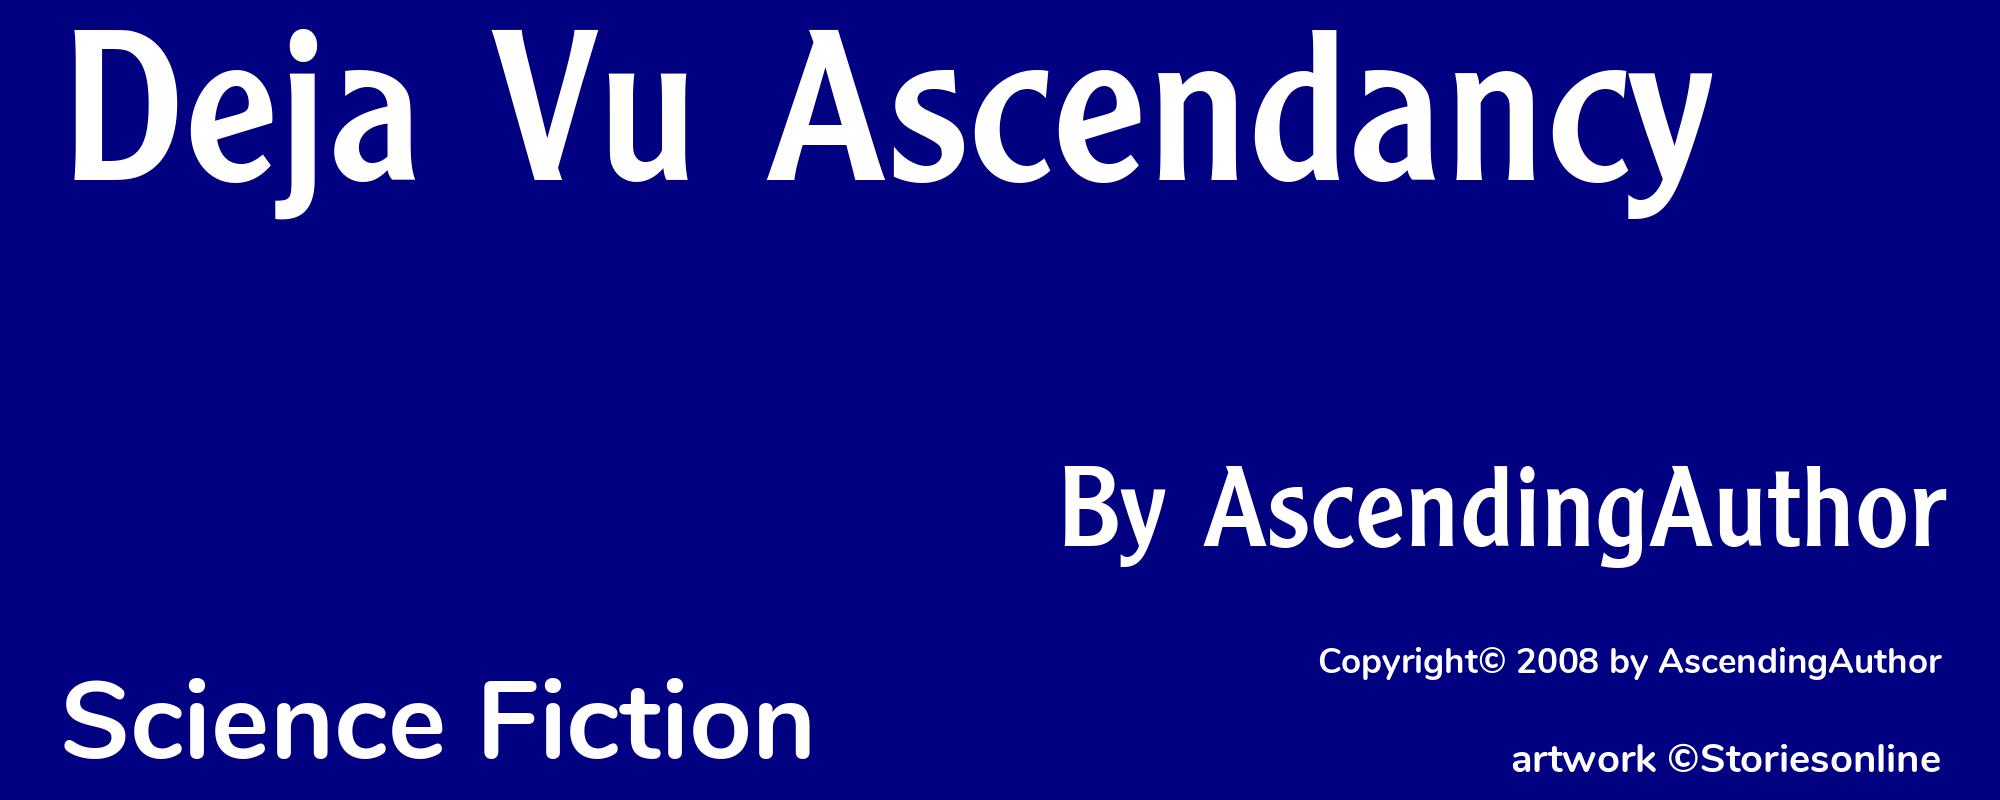 Deja Vu Ascendancy - Cover